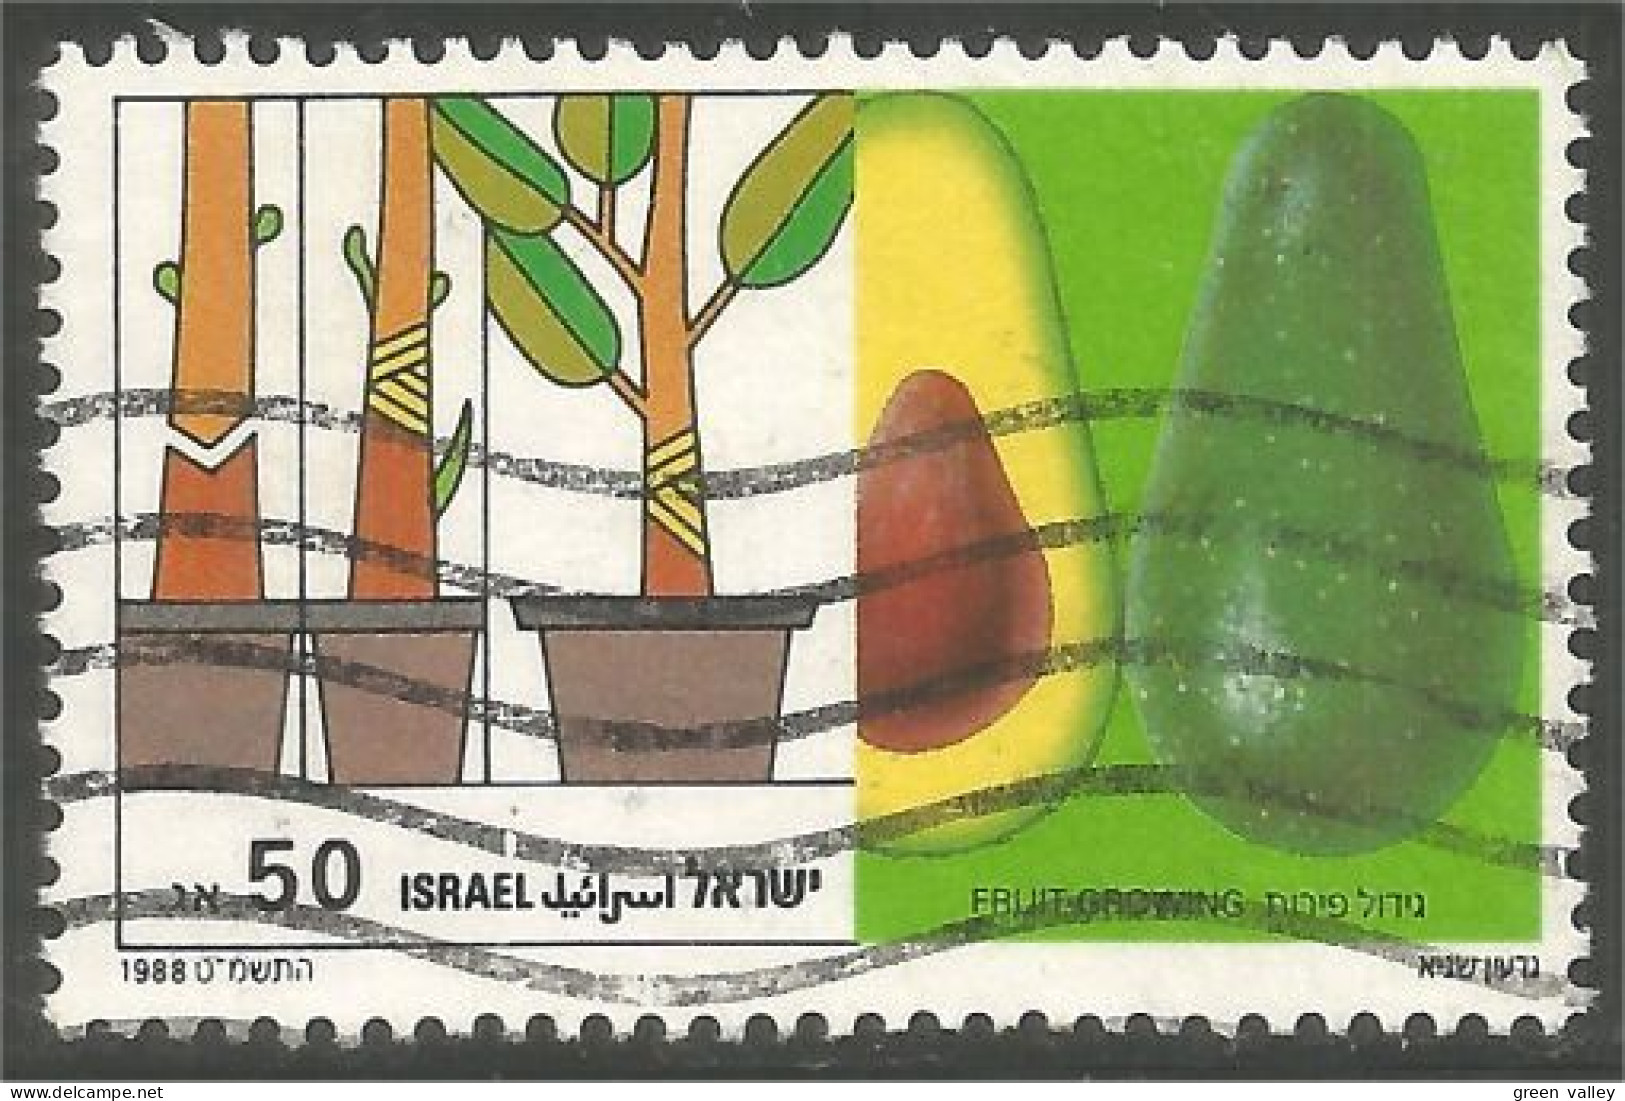 FR-11 Israel Fruits Avocat Aguacate Avocado - Obst & Früchte